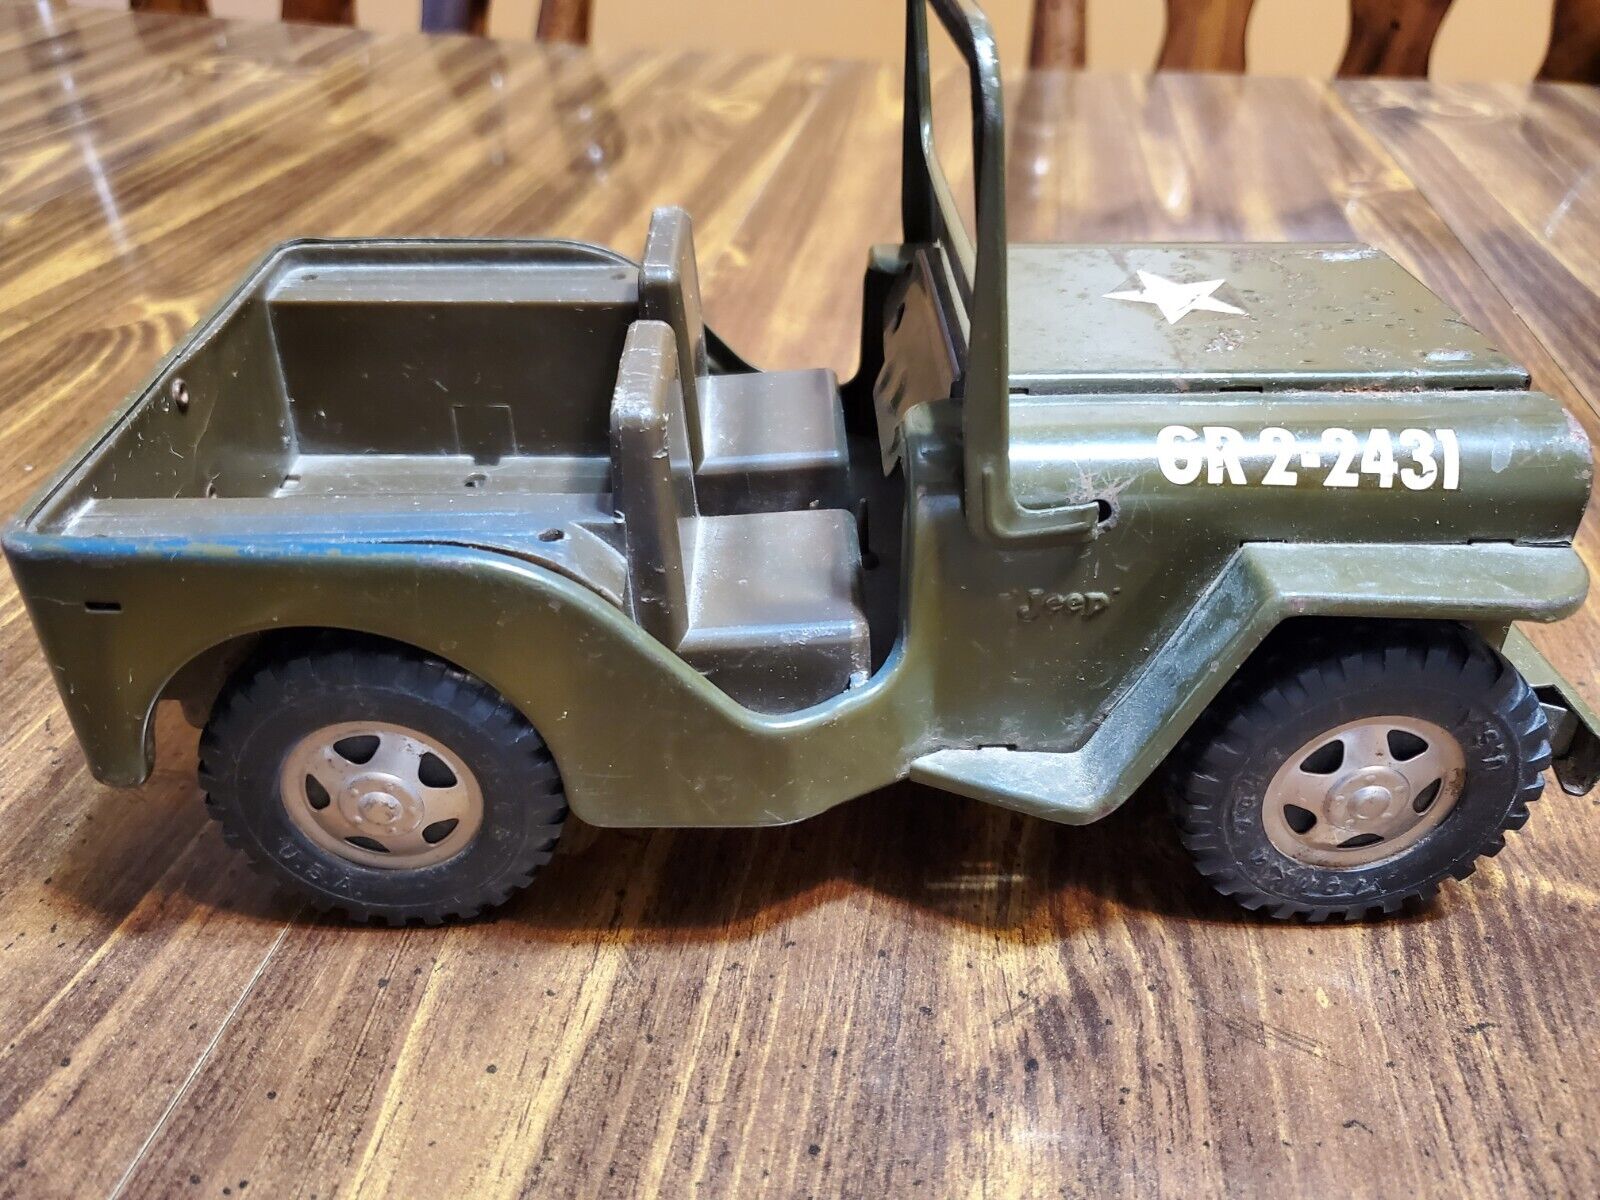 Vintage TONKA JEEP Army Military Commander Metal Car GR 2-2431